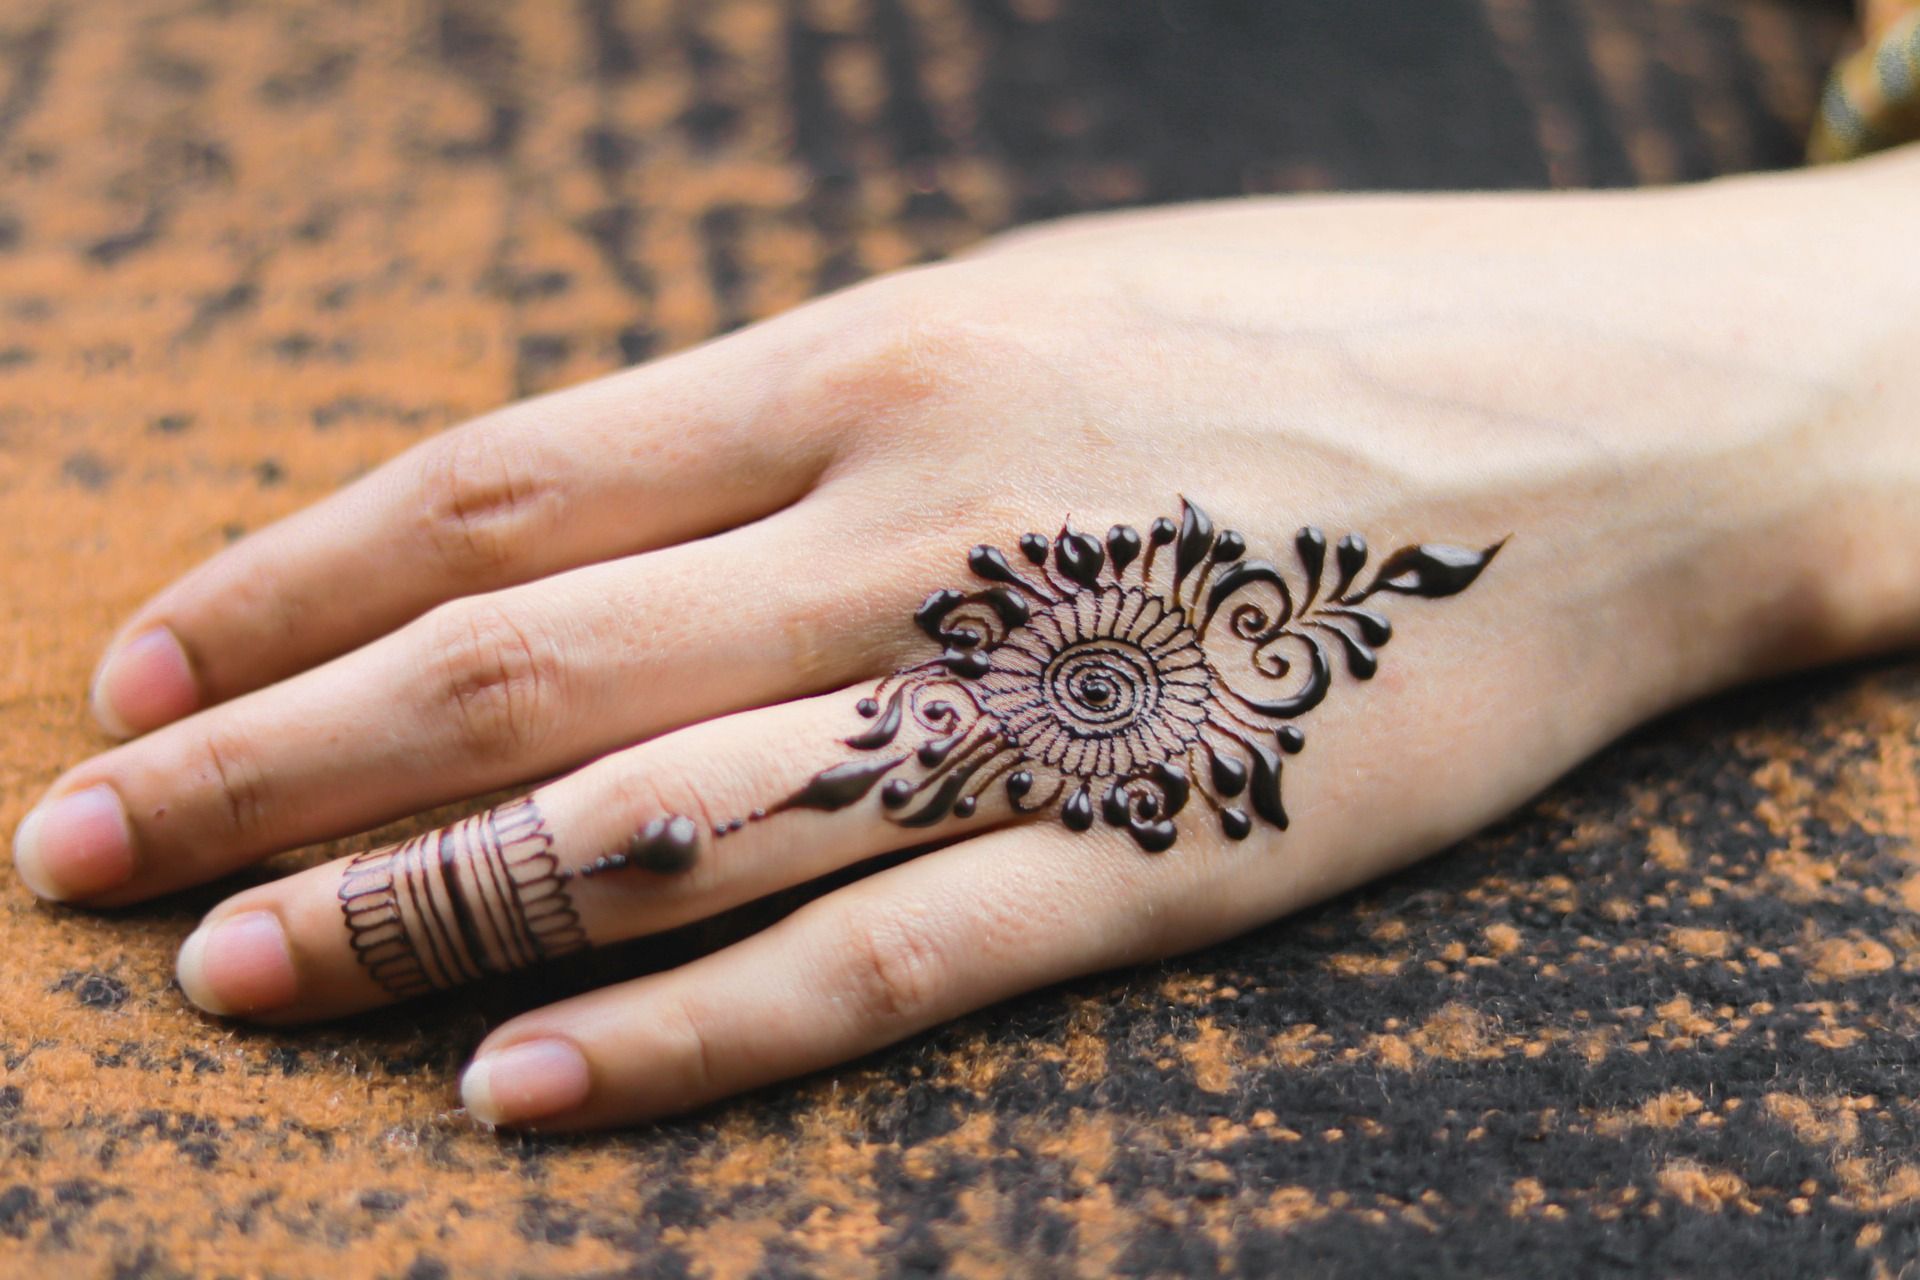 Los tatuajes temporales de henna negra pueden ser muy peligrosos / Foto: Mehndi Training Center - Pixabay